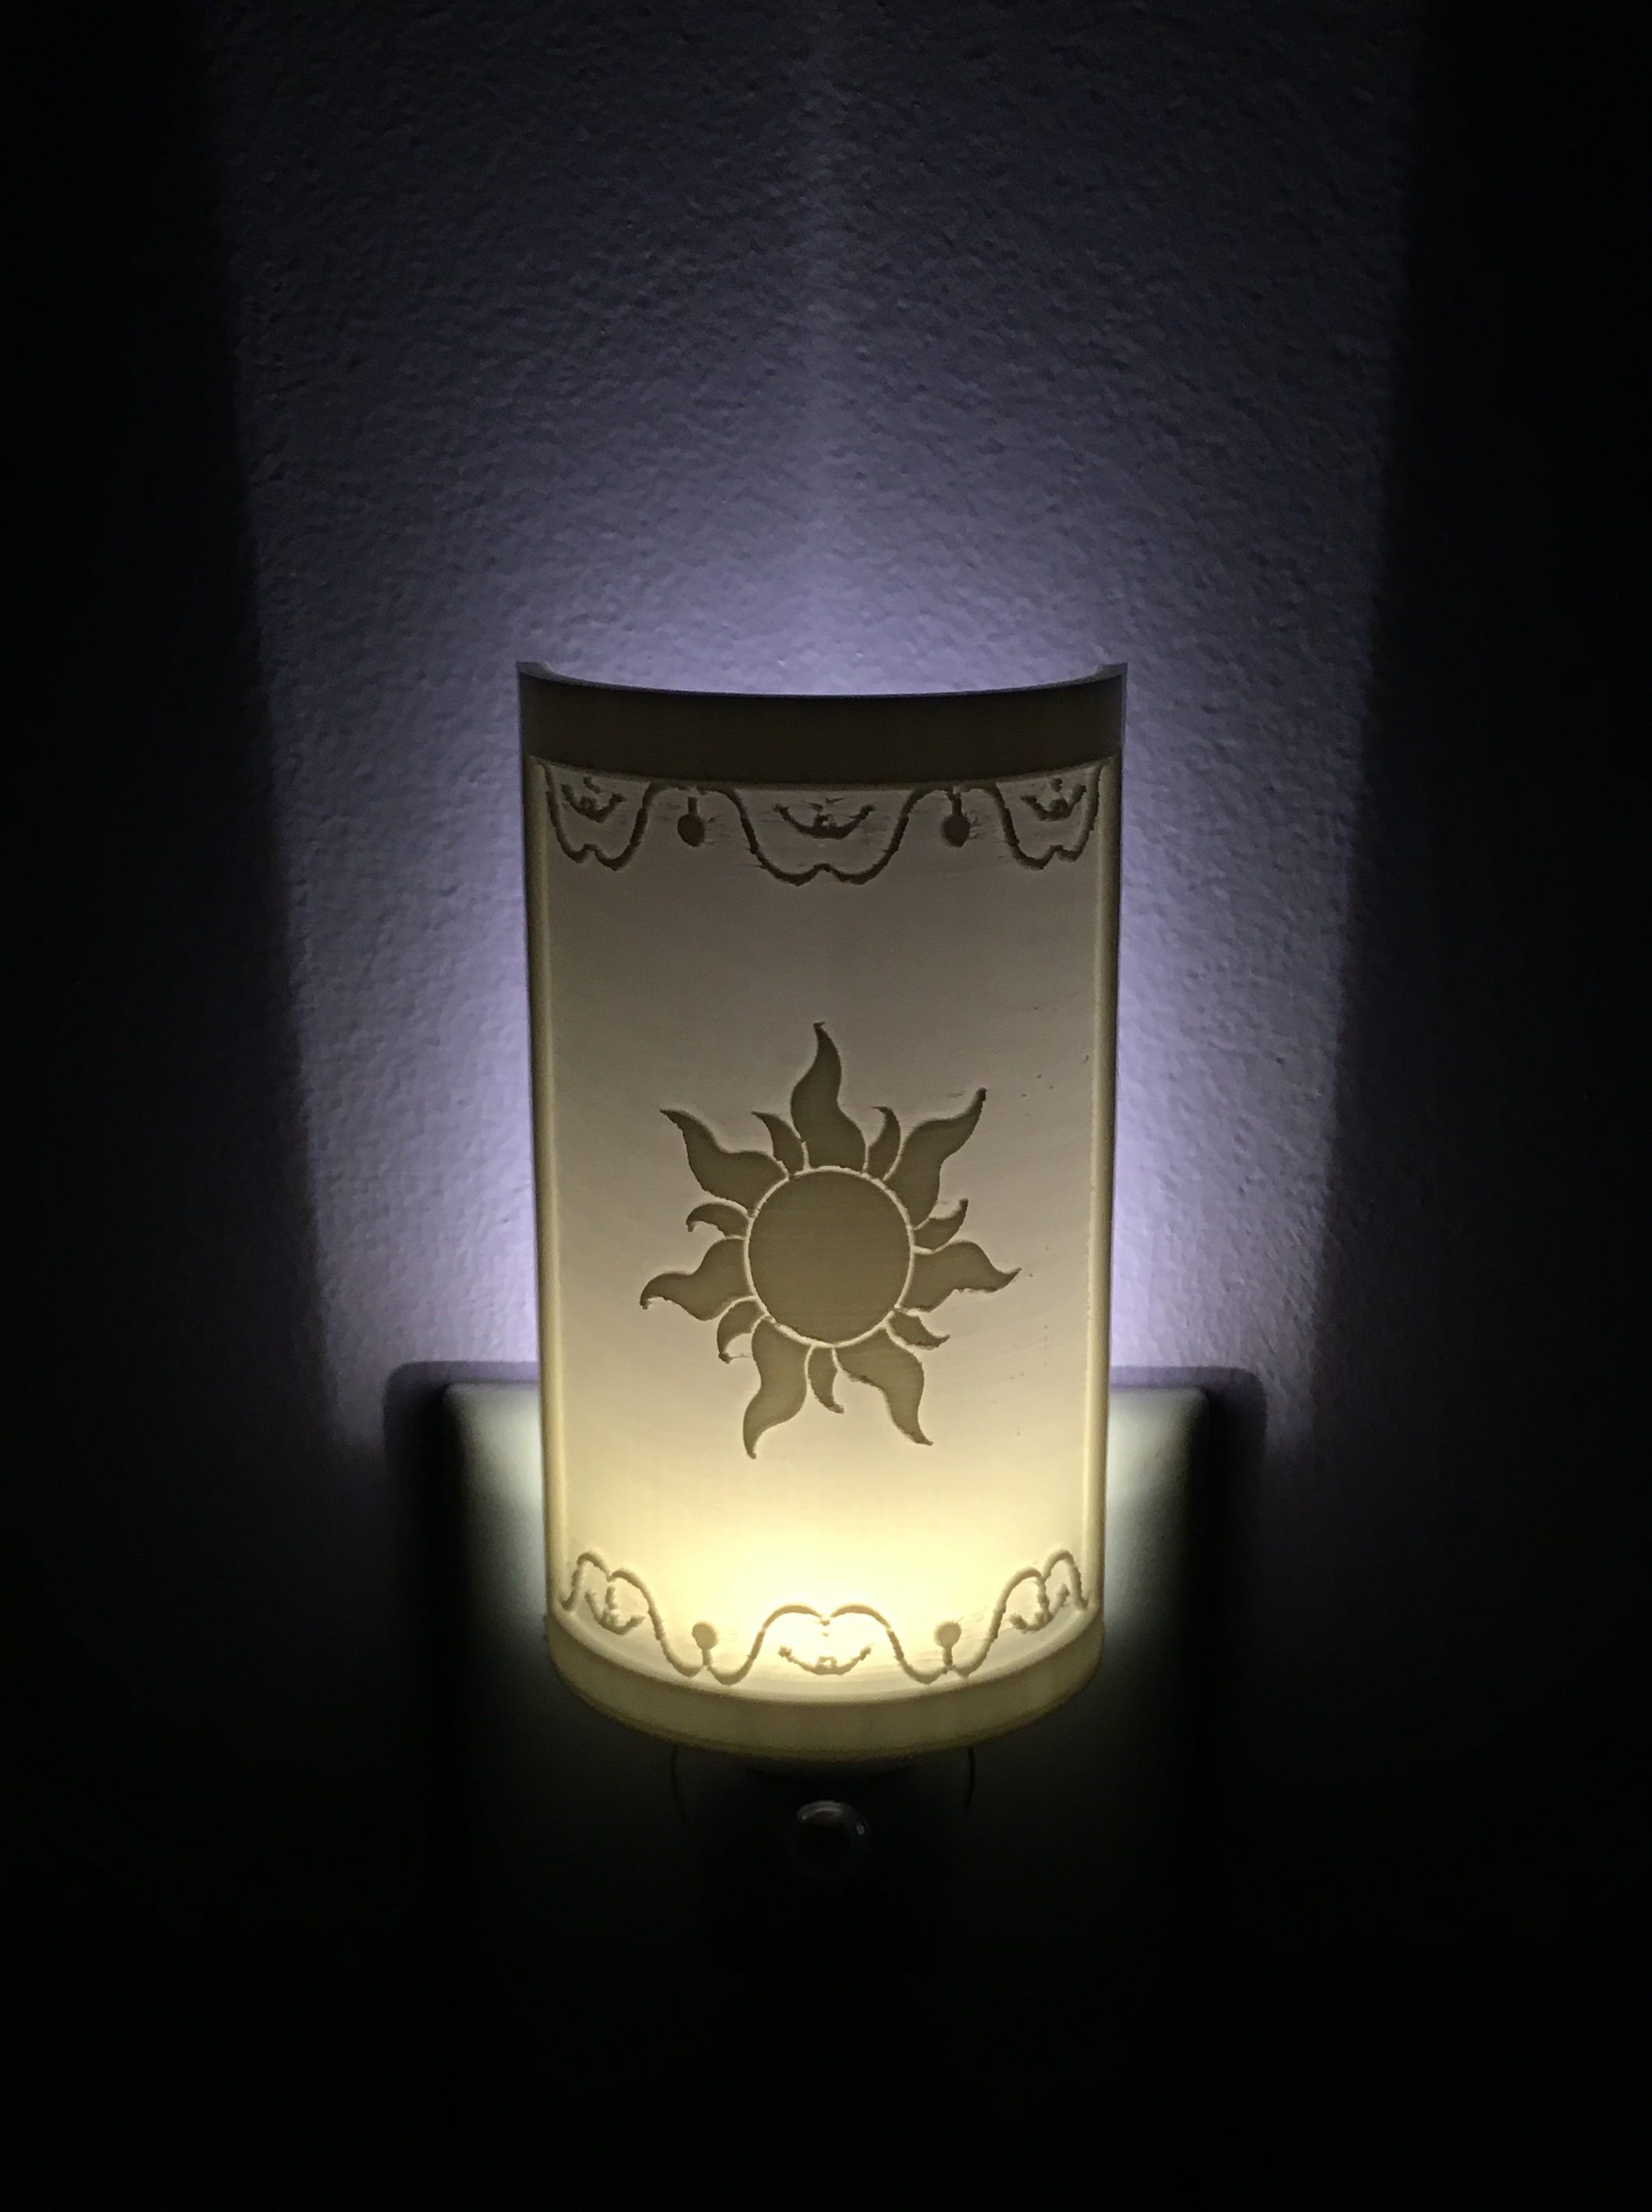 Tangled-inspired Lantern Night Light